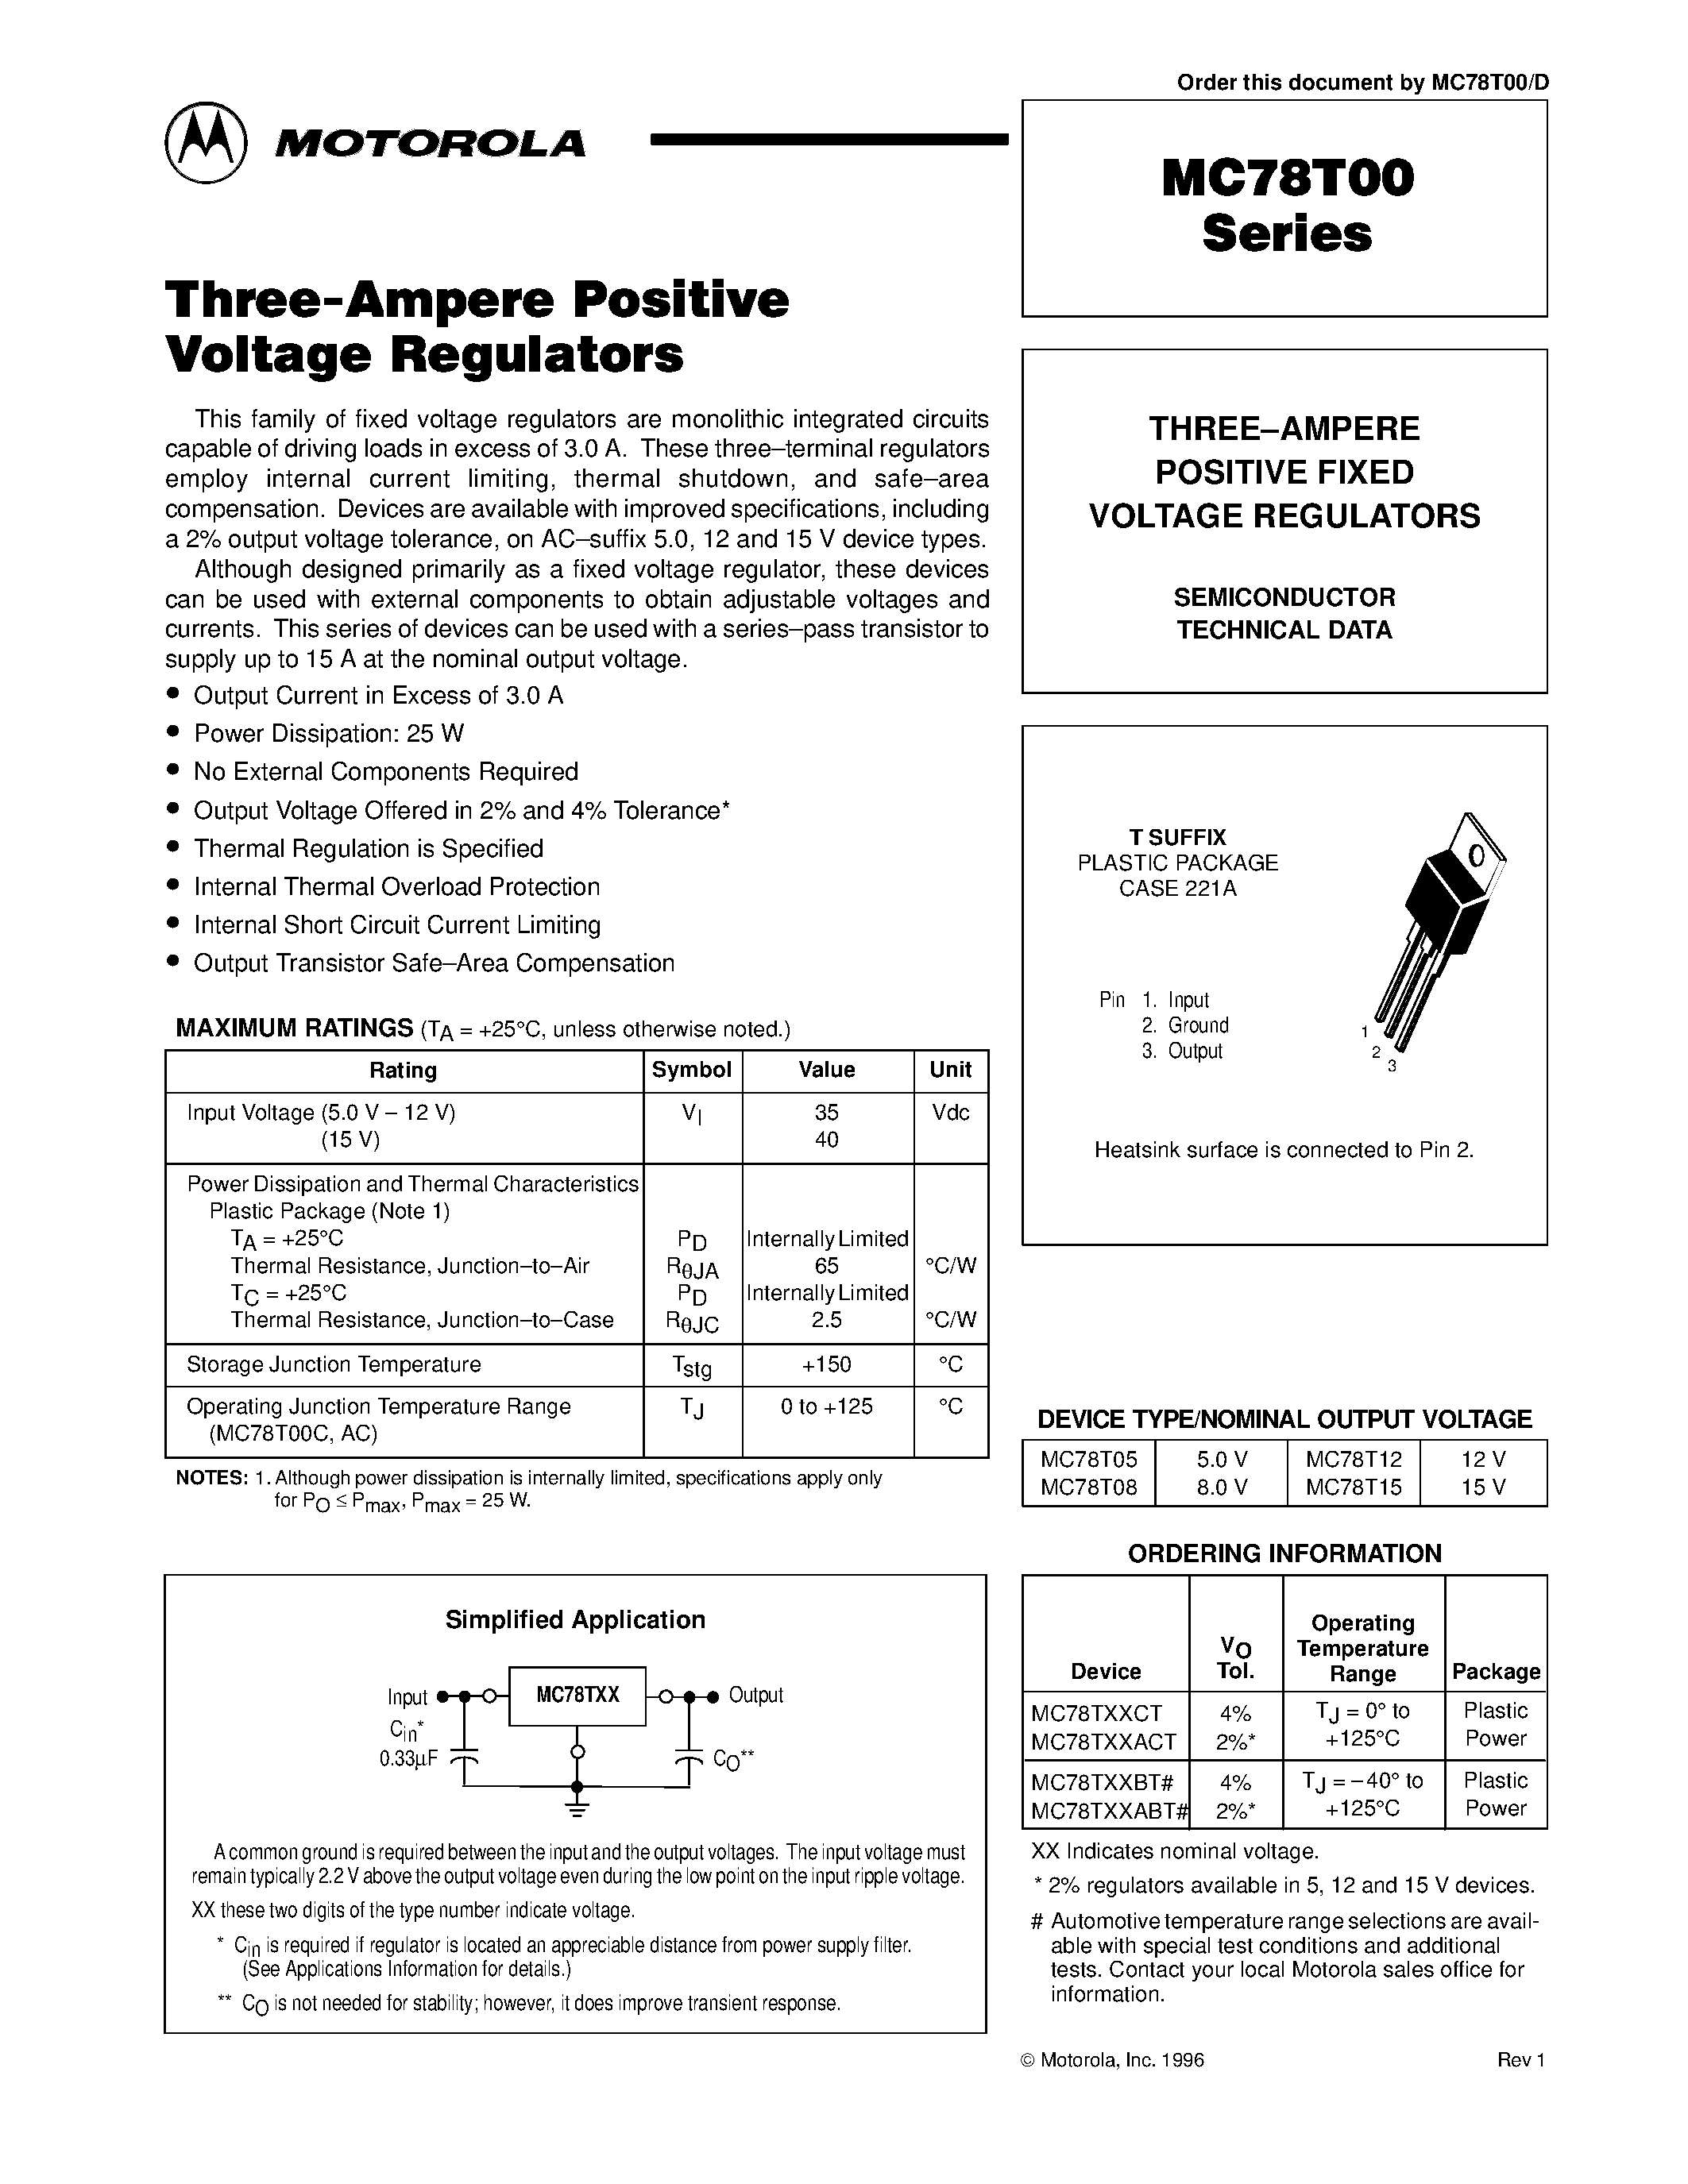 Datasheet MC78T12AC - THREE-AMPERE POSITIVE FIXED VOLTAGE REGULATORS page 1